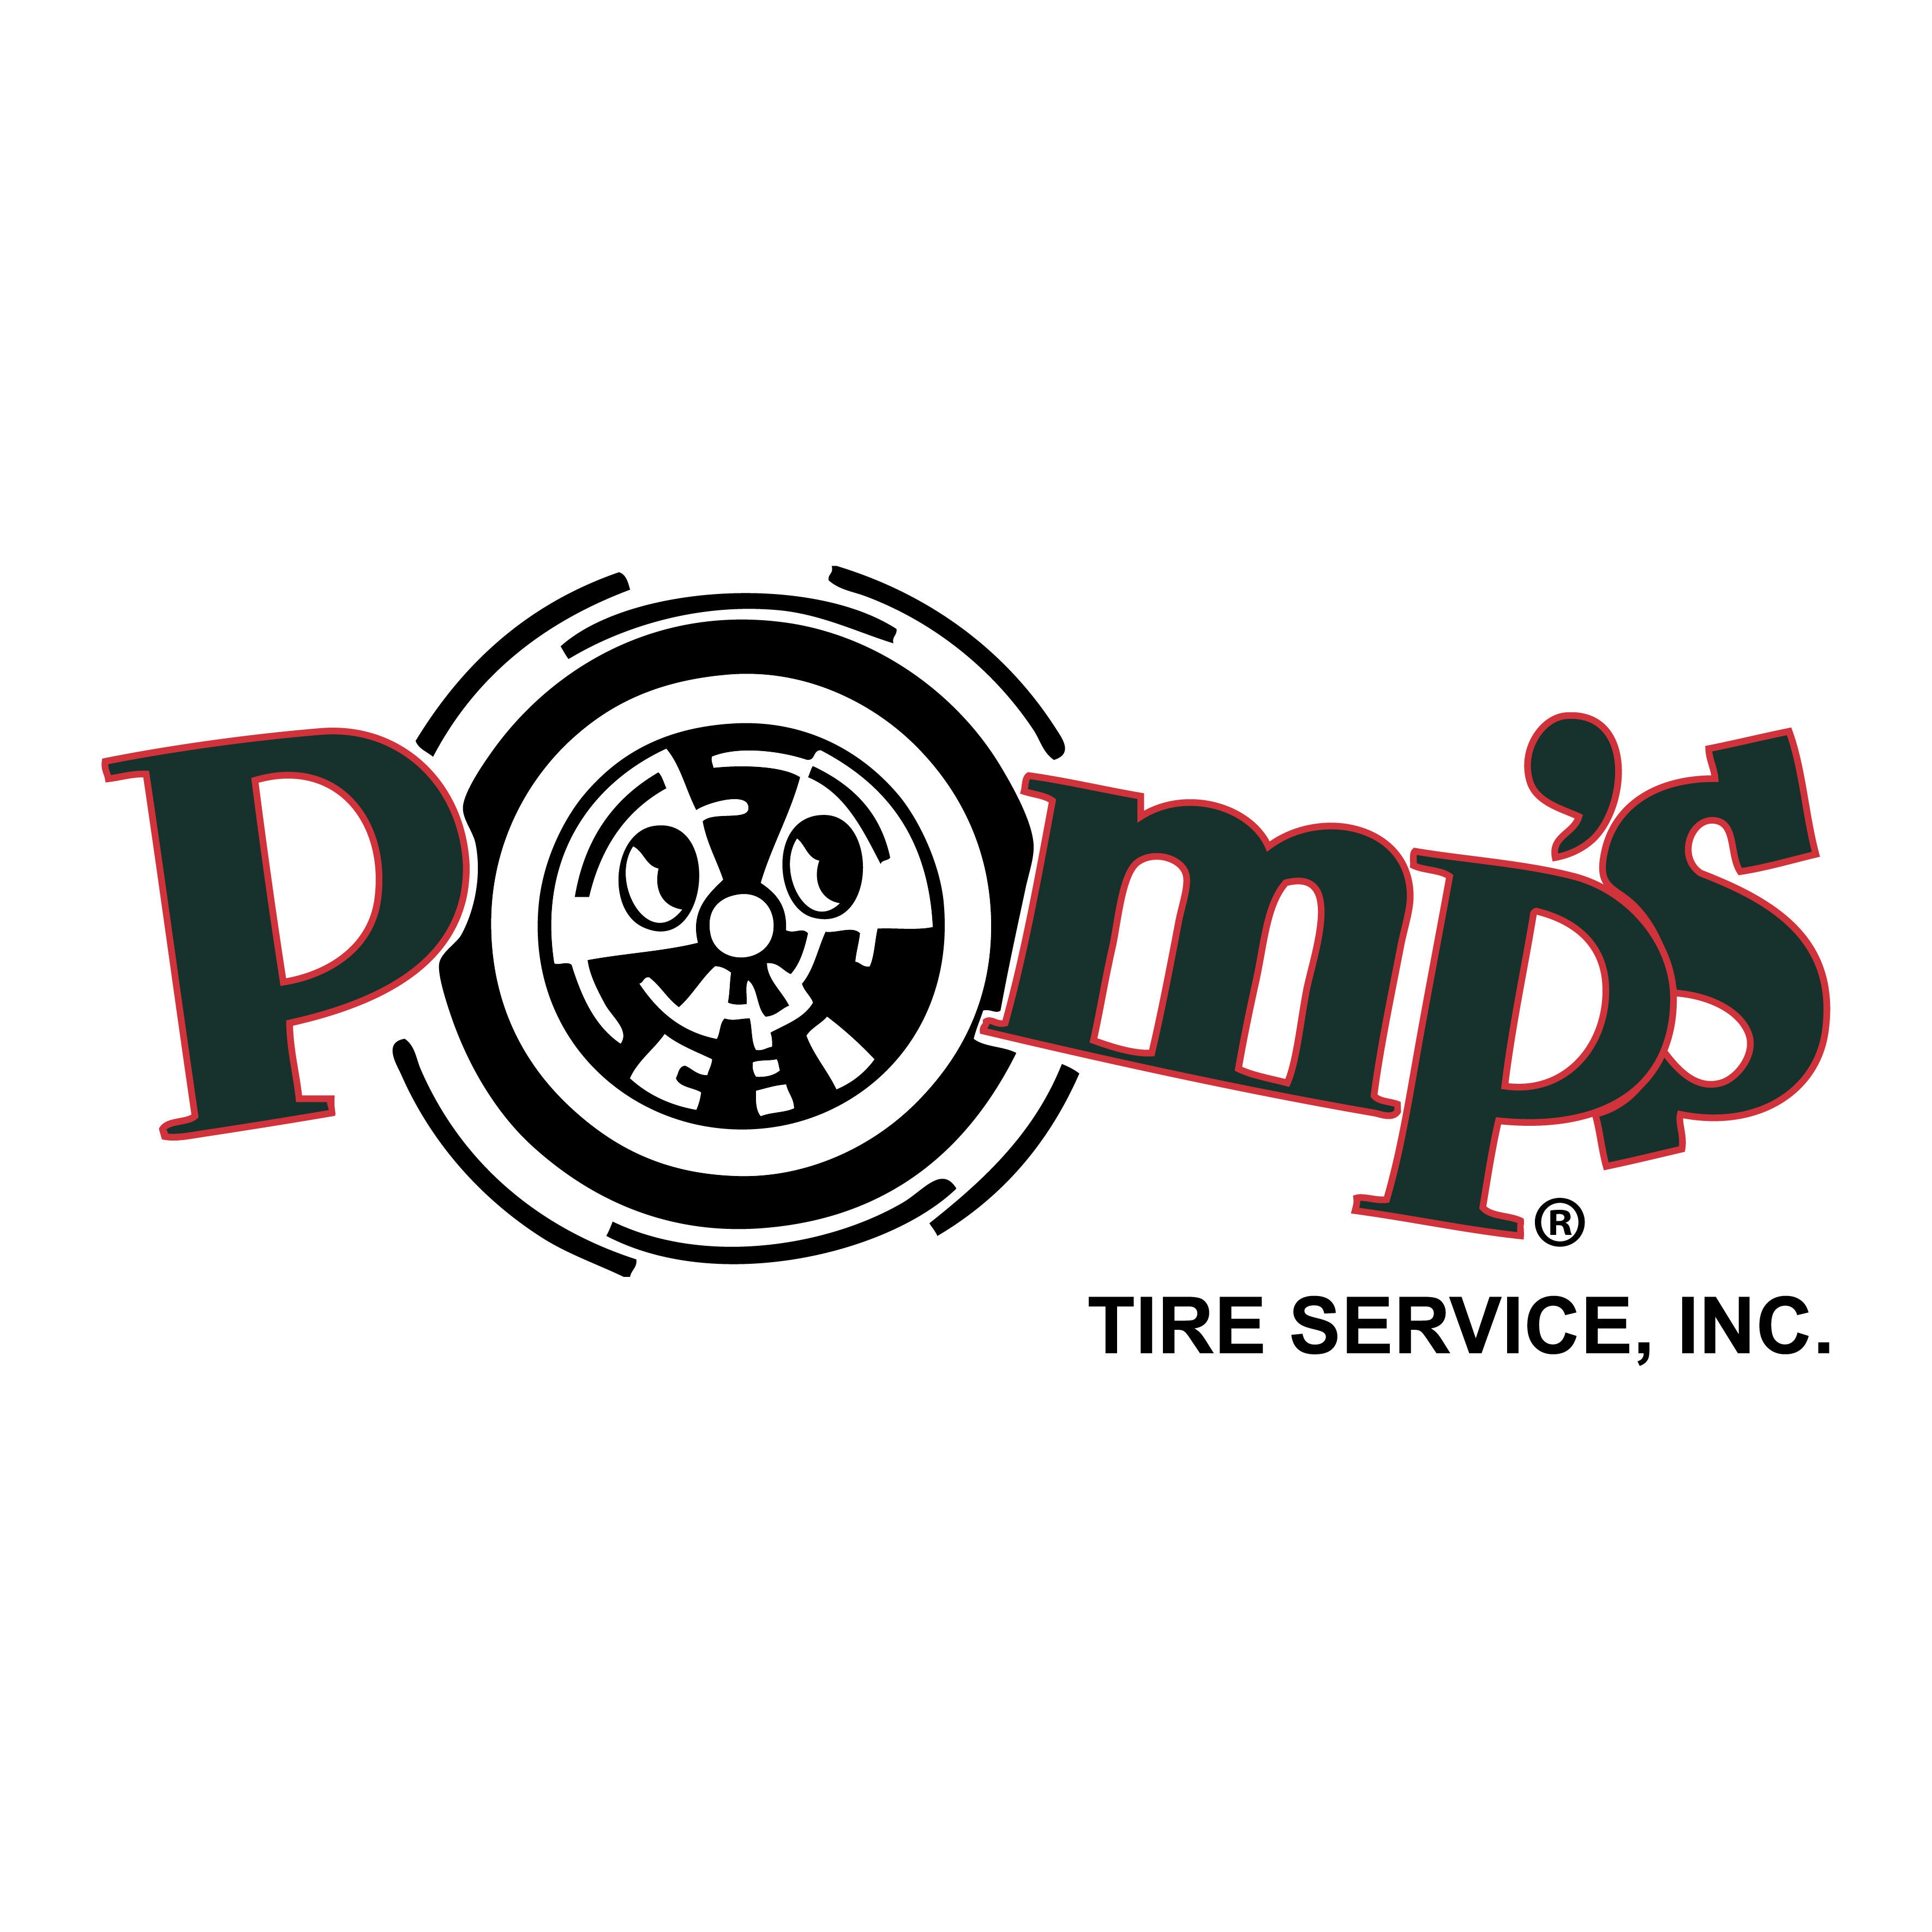 Pomp's Tire Service - Mills, WY 82644 - (307)224-0144 | ShowMeLocal.com